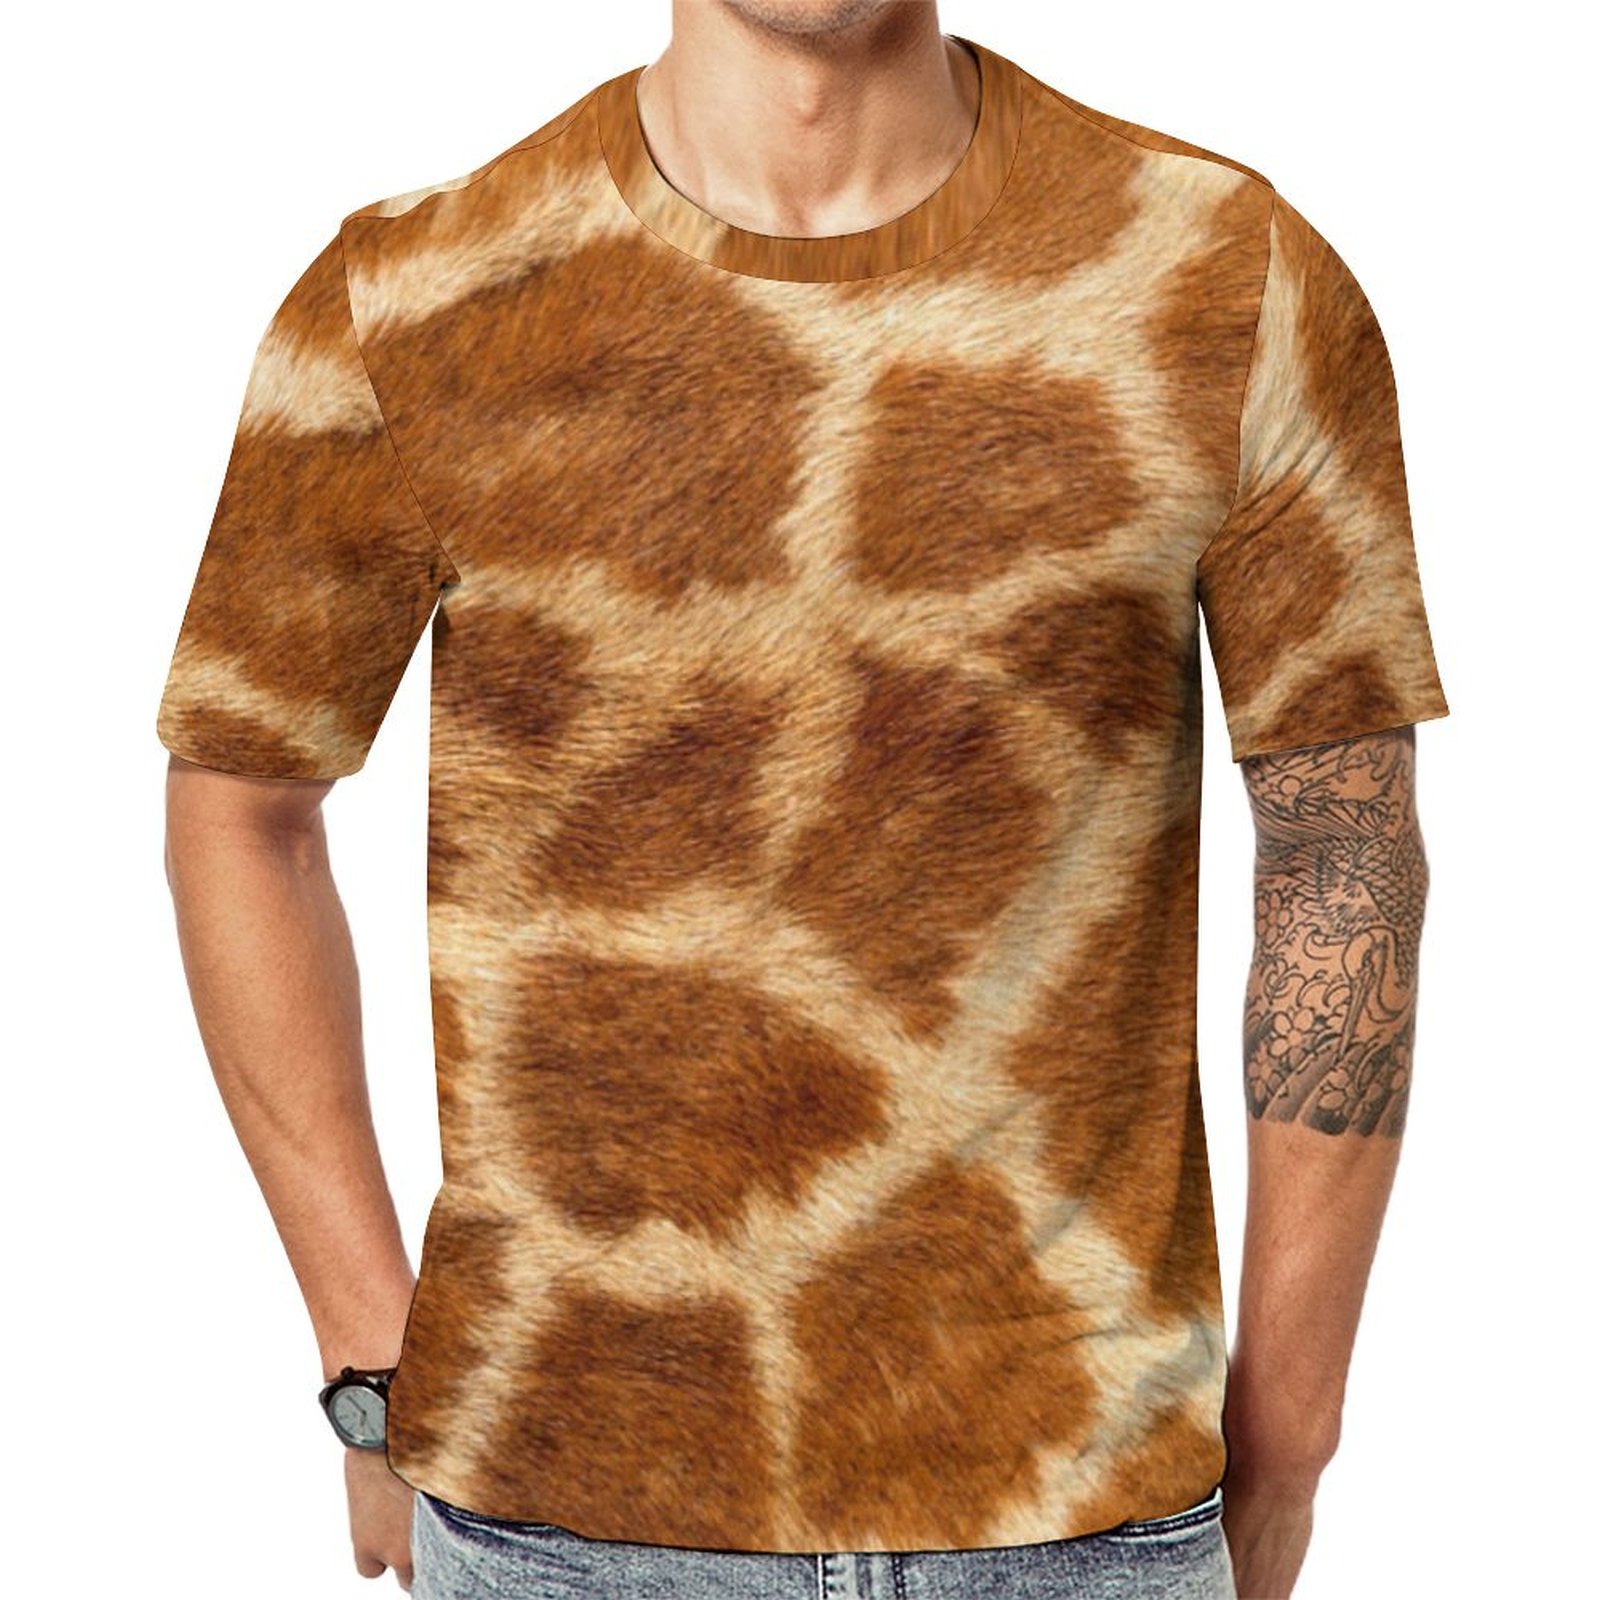 Giraffe Fur Spots Realistic Ombre Brown Light Caramel Short Sleeve Print Unisex Tshirt Summer Casual Tees for Men and Women Coolcoshirts